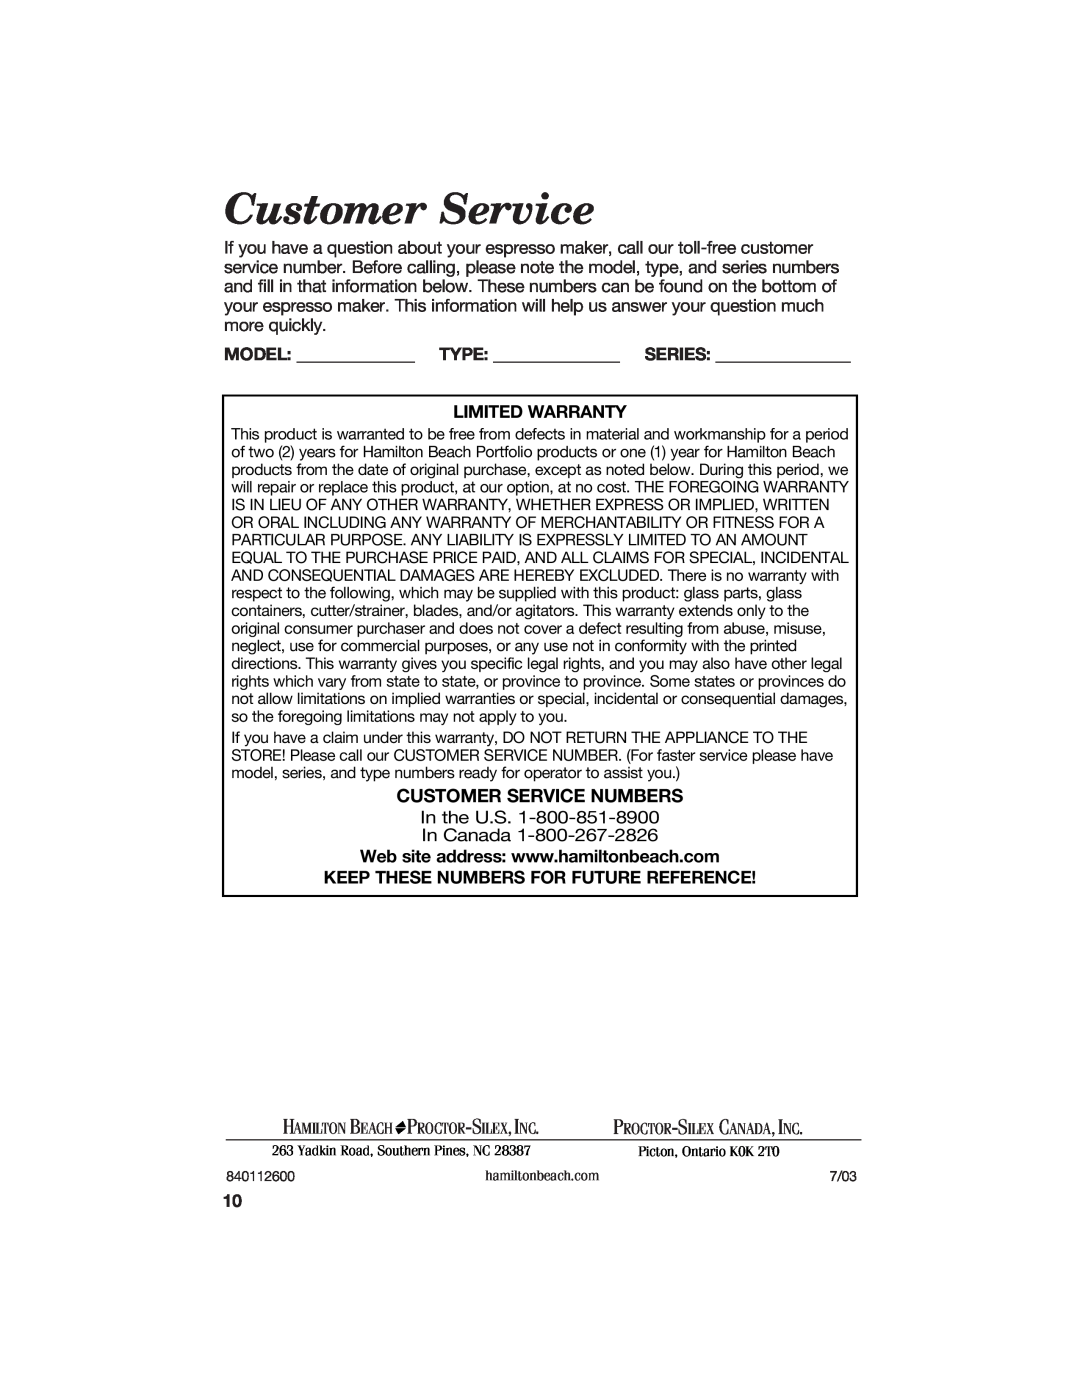 Hamilton Beach Cappuccino Plus specifications Customer Service Numbers, Hamilton Beach, Proctor-Silex,Inc 